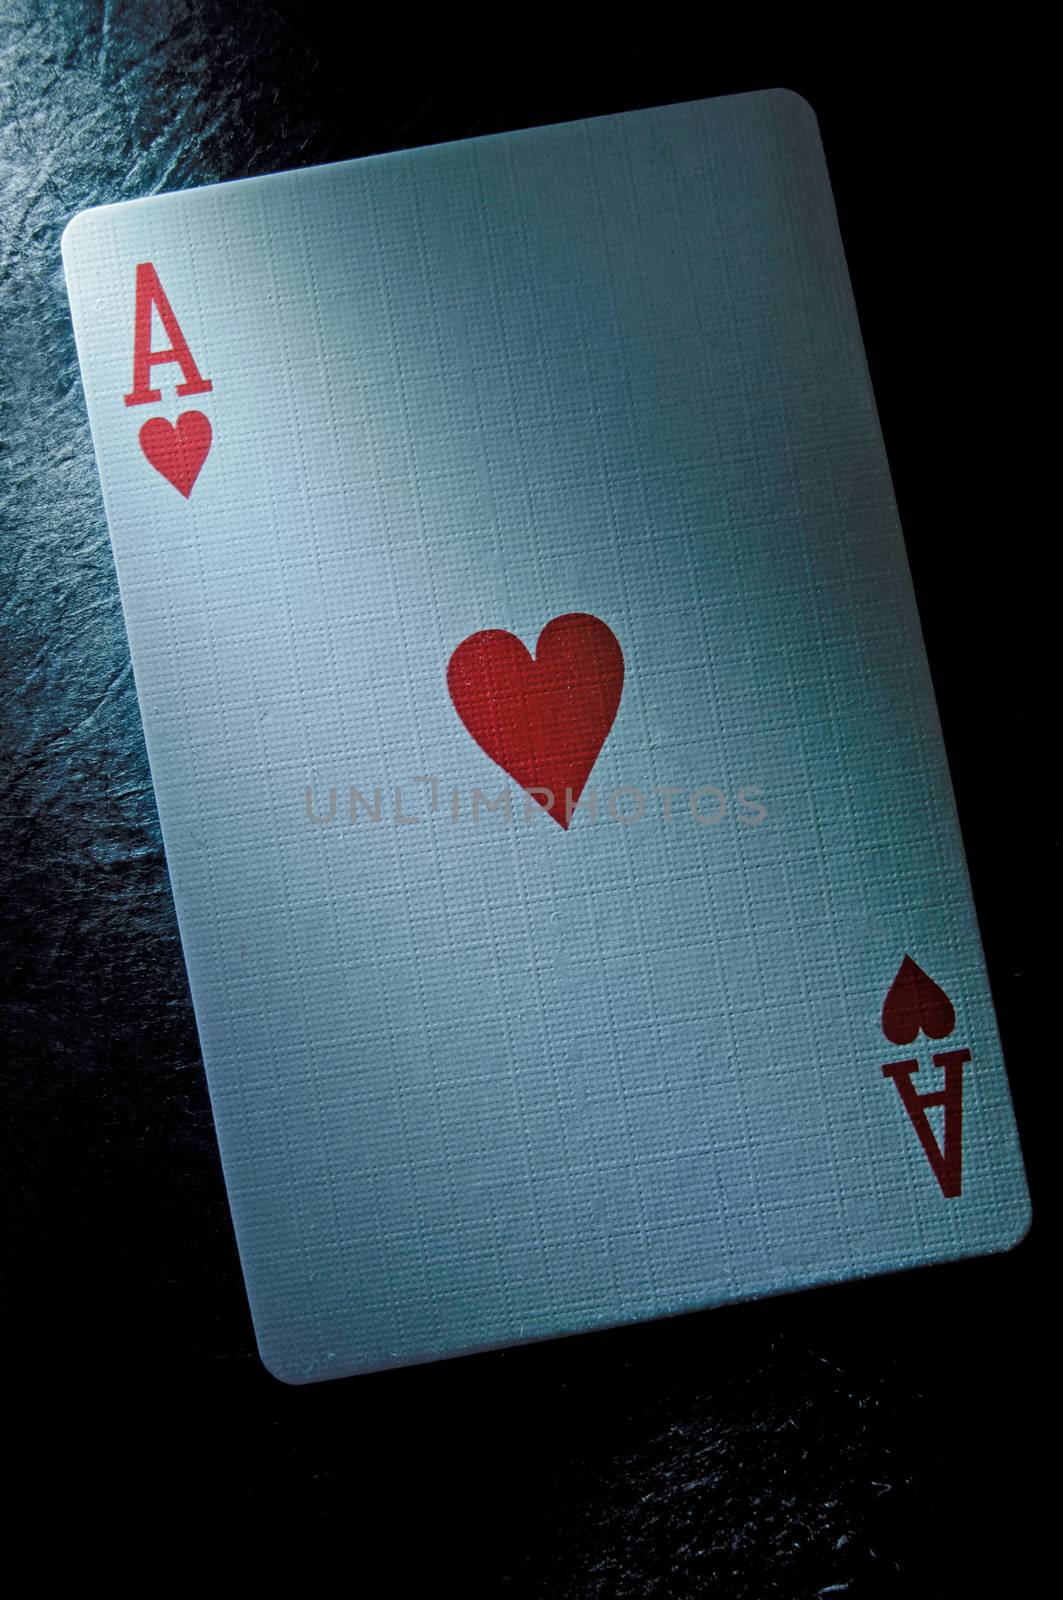 Ace card by unikpix